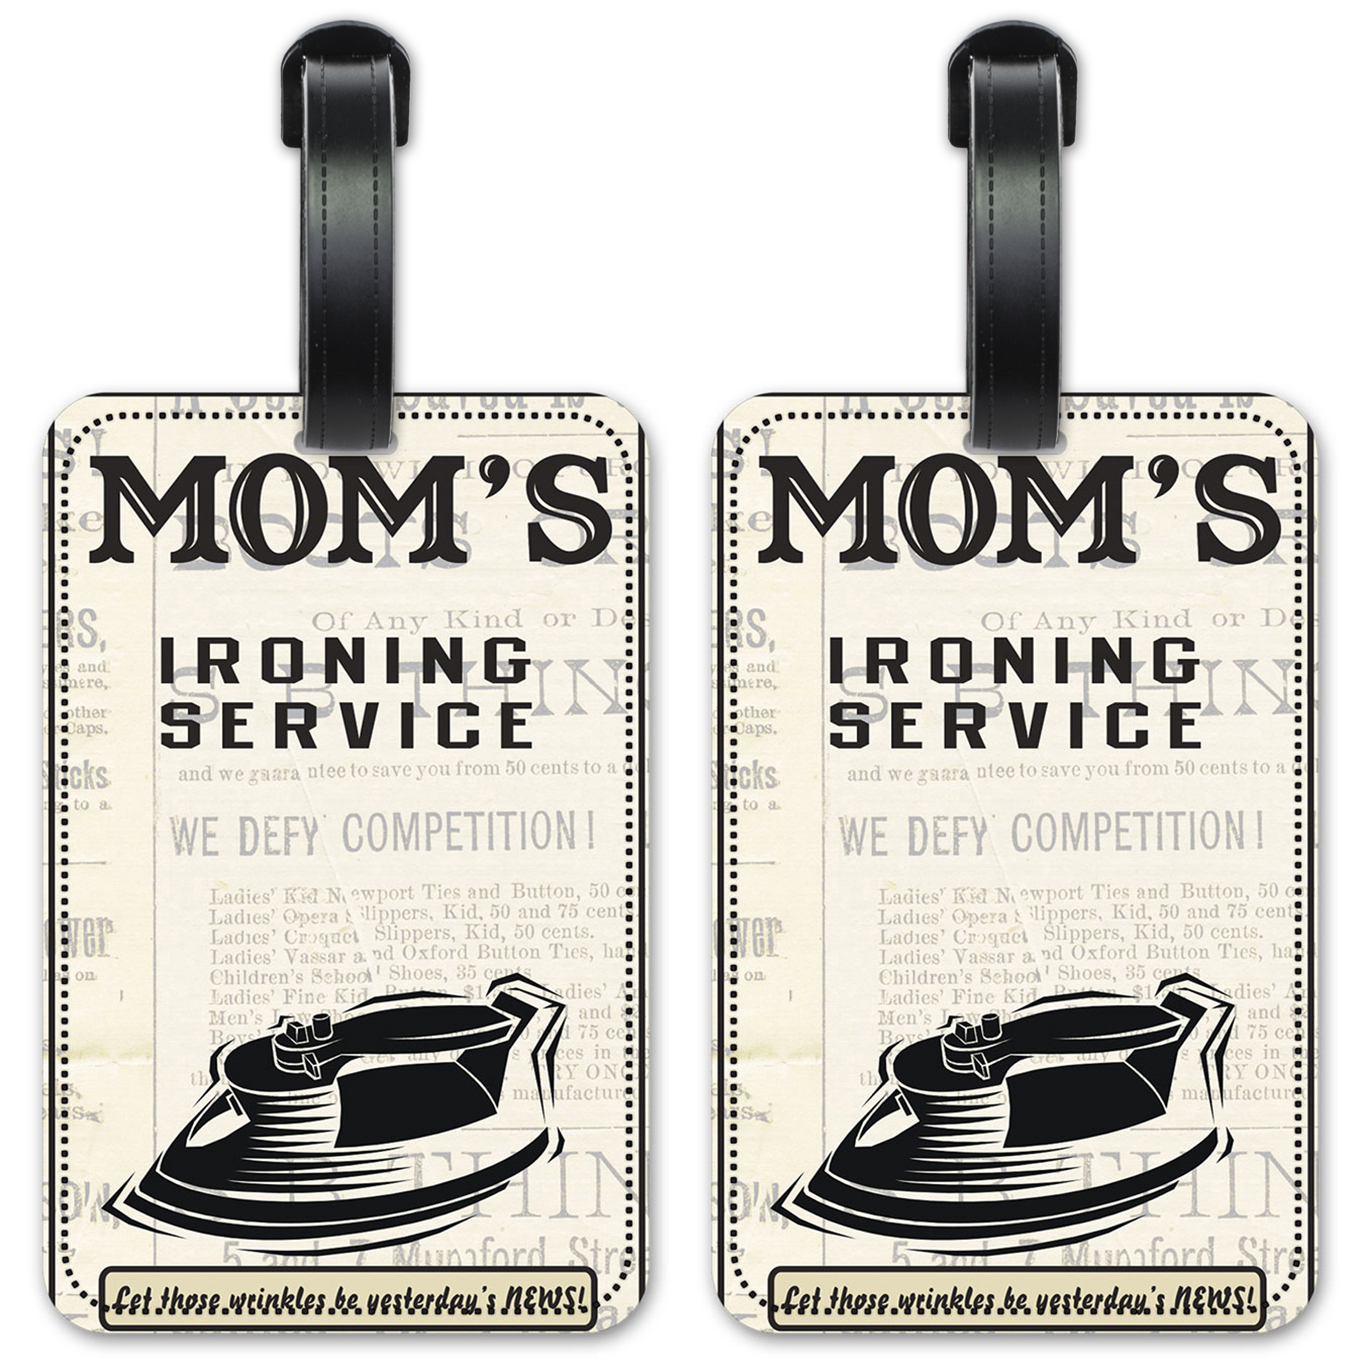 Mom's Ironing Service - #468